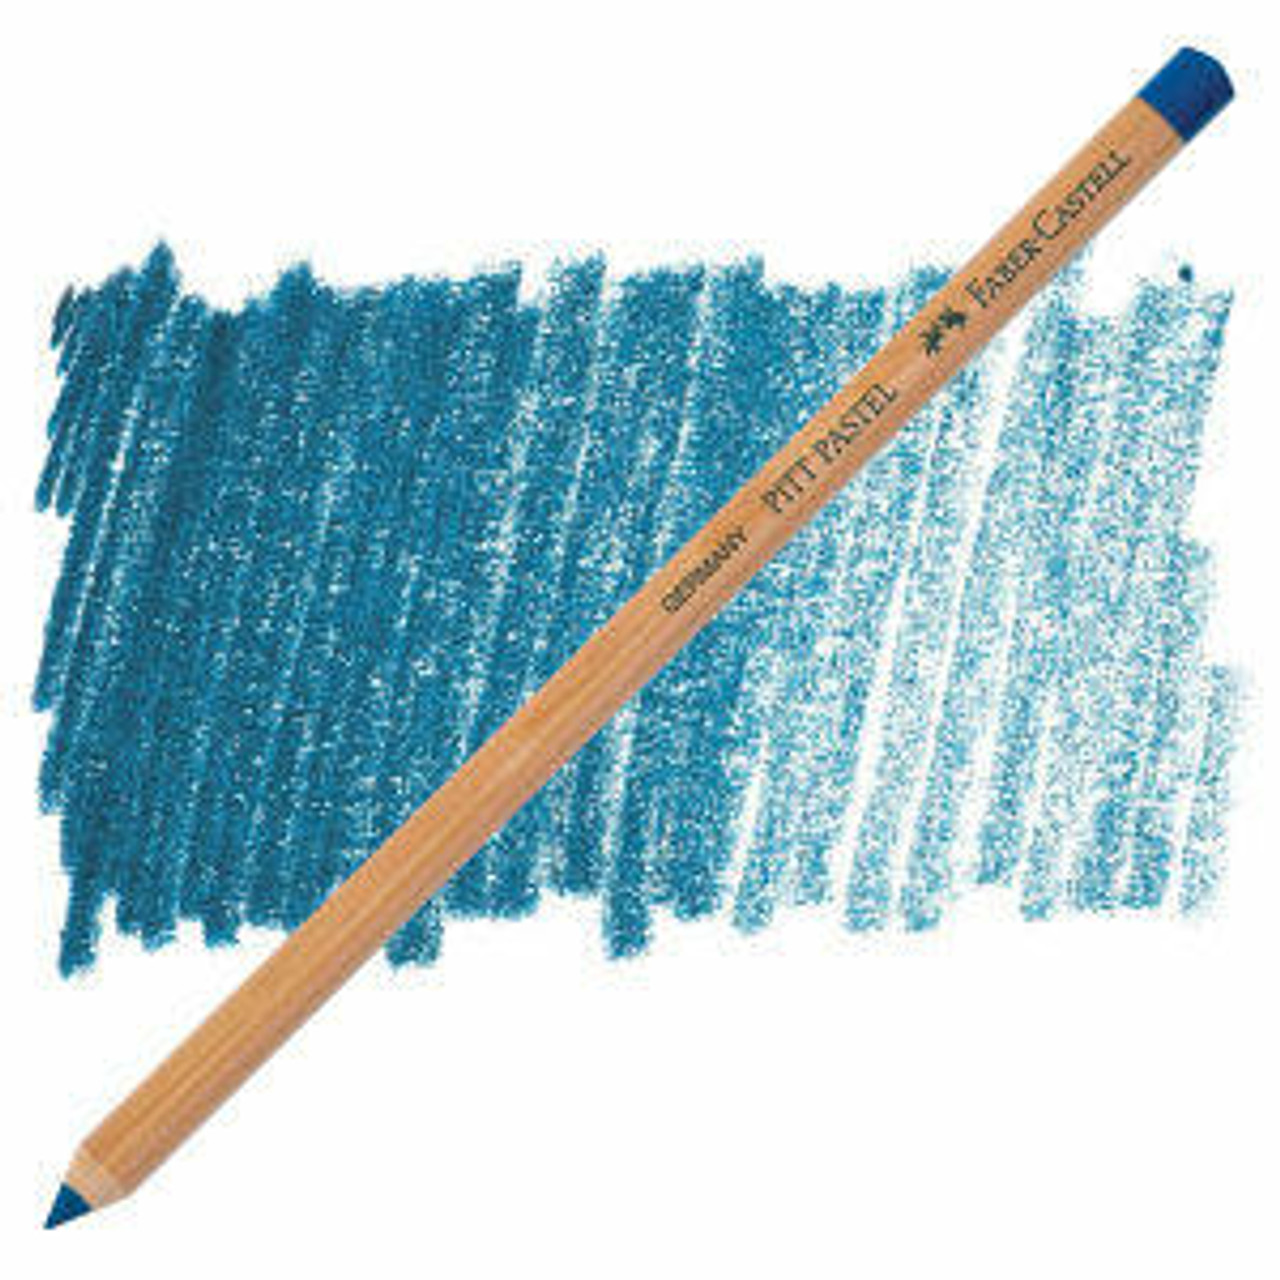 Art Supplies - Pastels - Faber-Castell Pastels - Pitt Pastel Pencils - Sam  Flax Atlanta